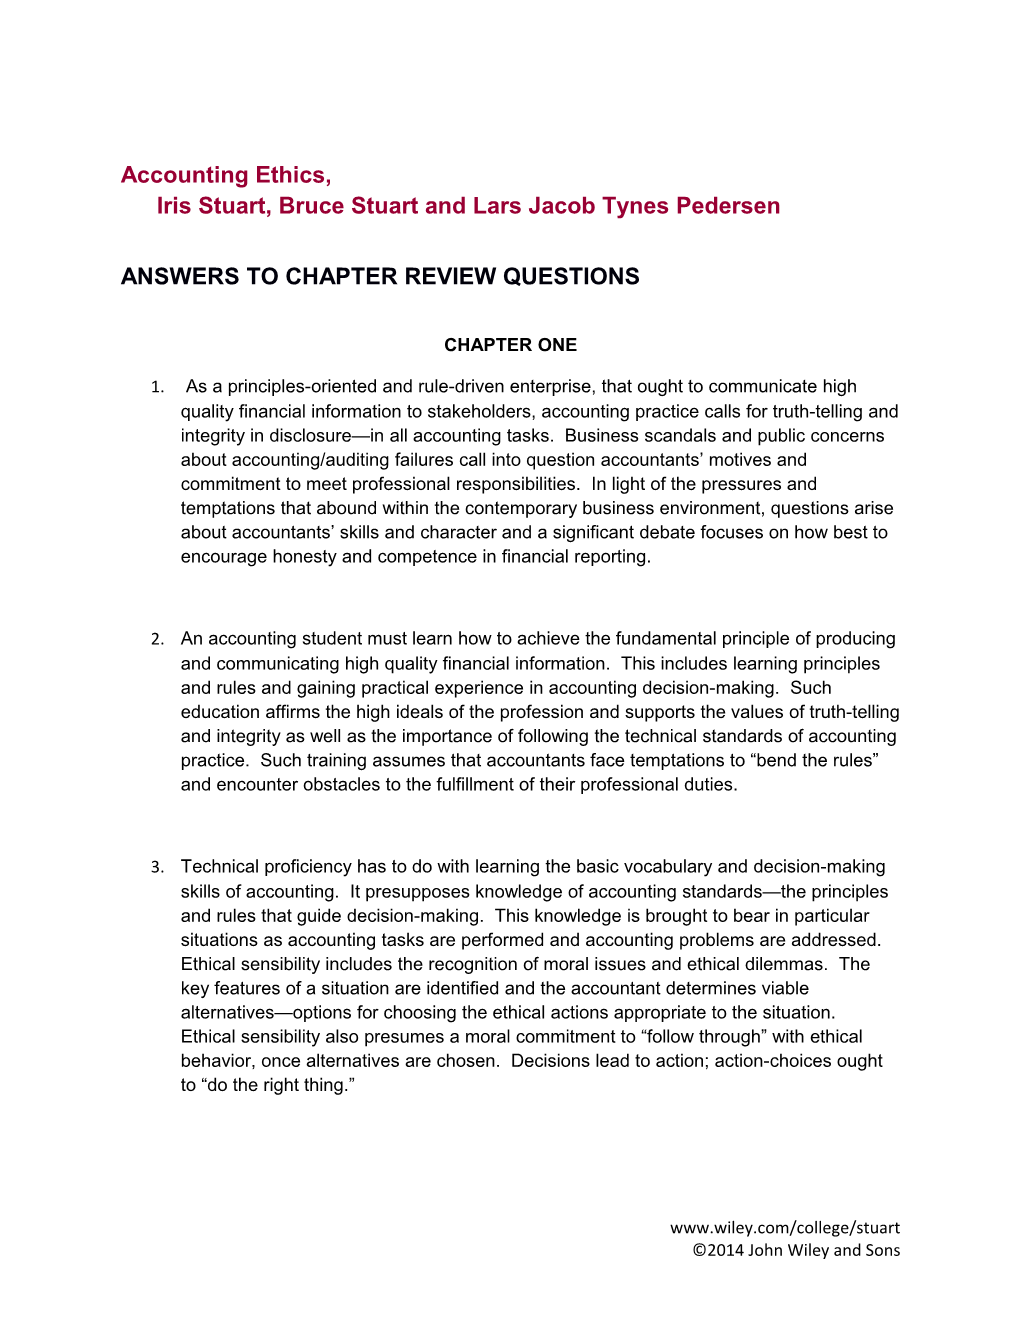 Accounting Ethics, Iris Stuart, Bruce Stuart and Lars Jacob Tynes Pedersen